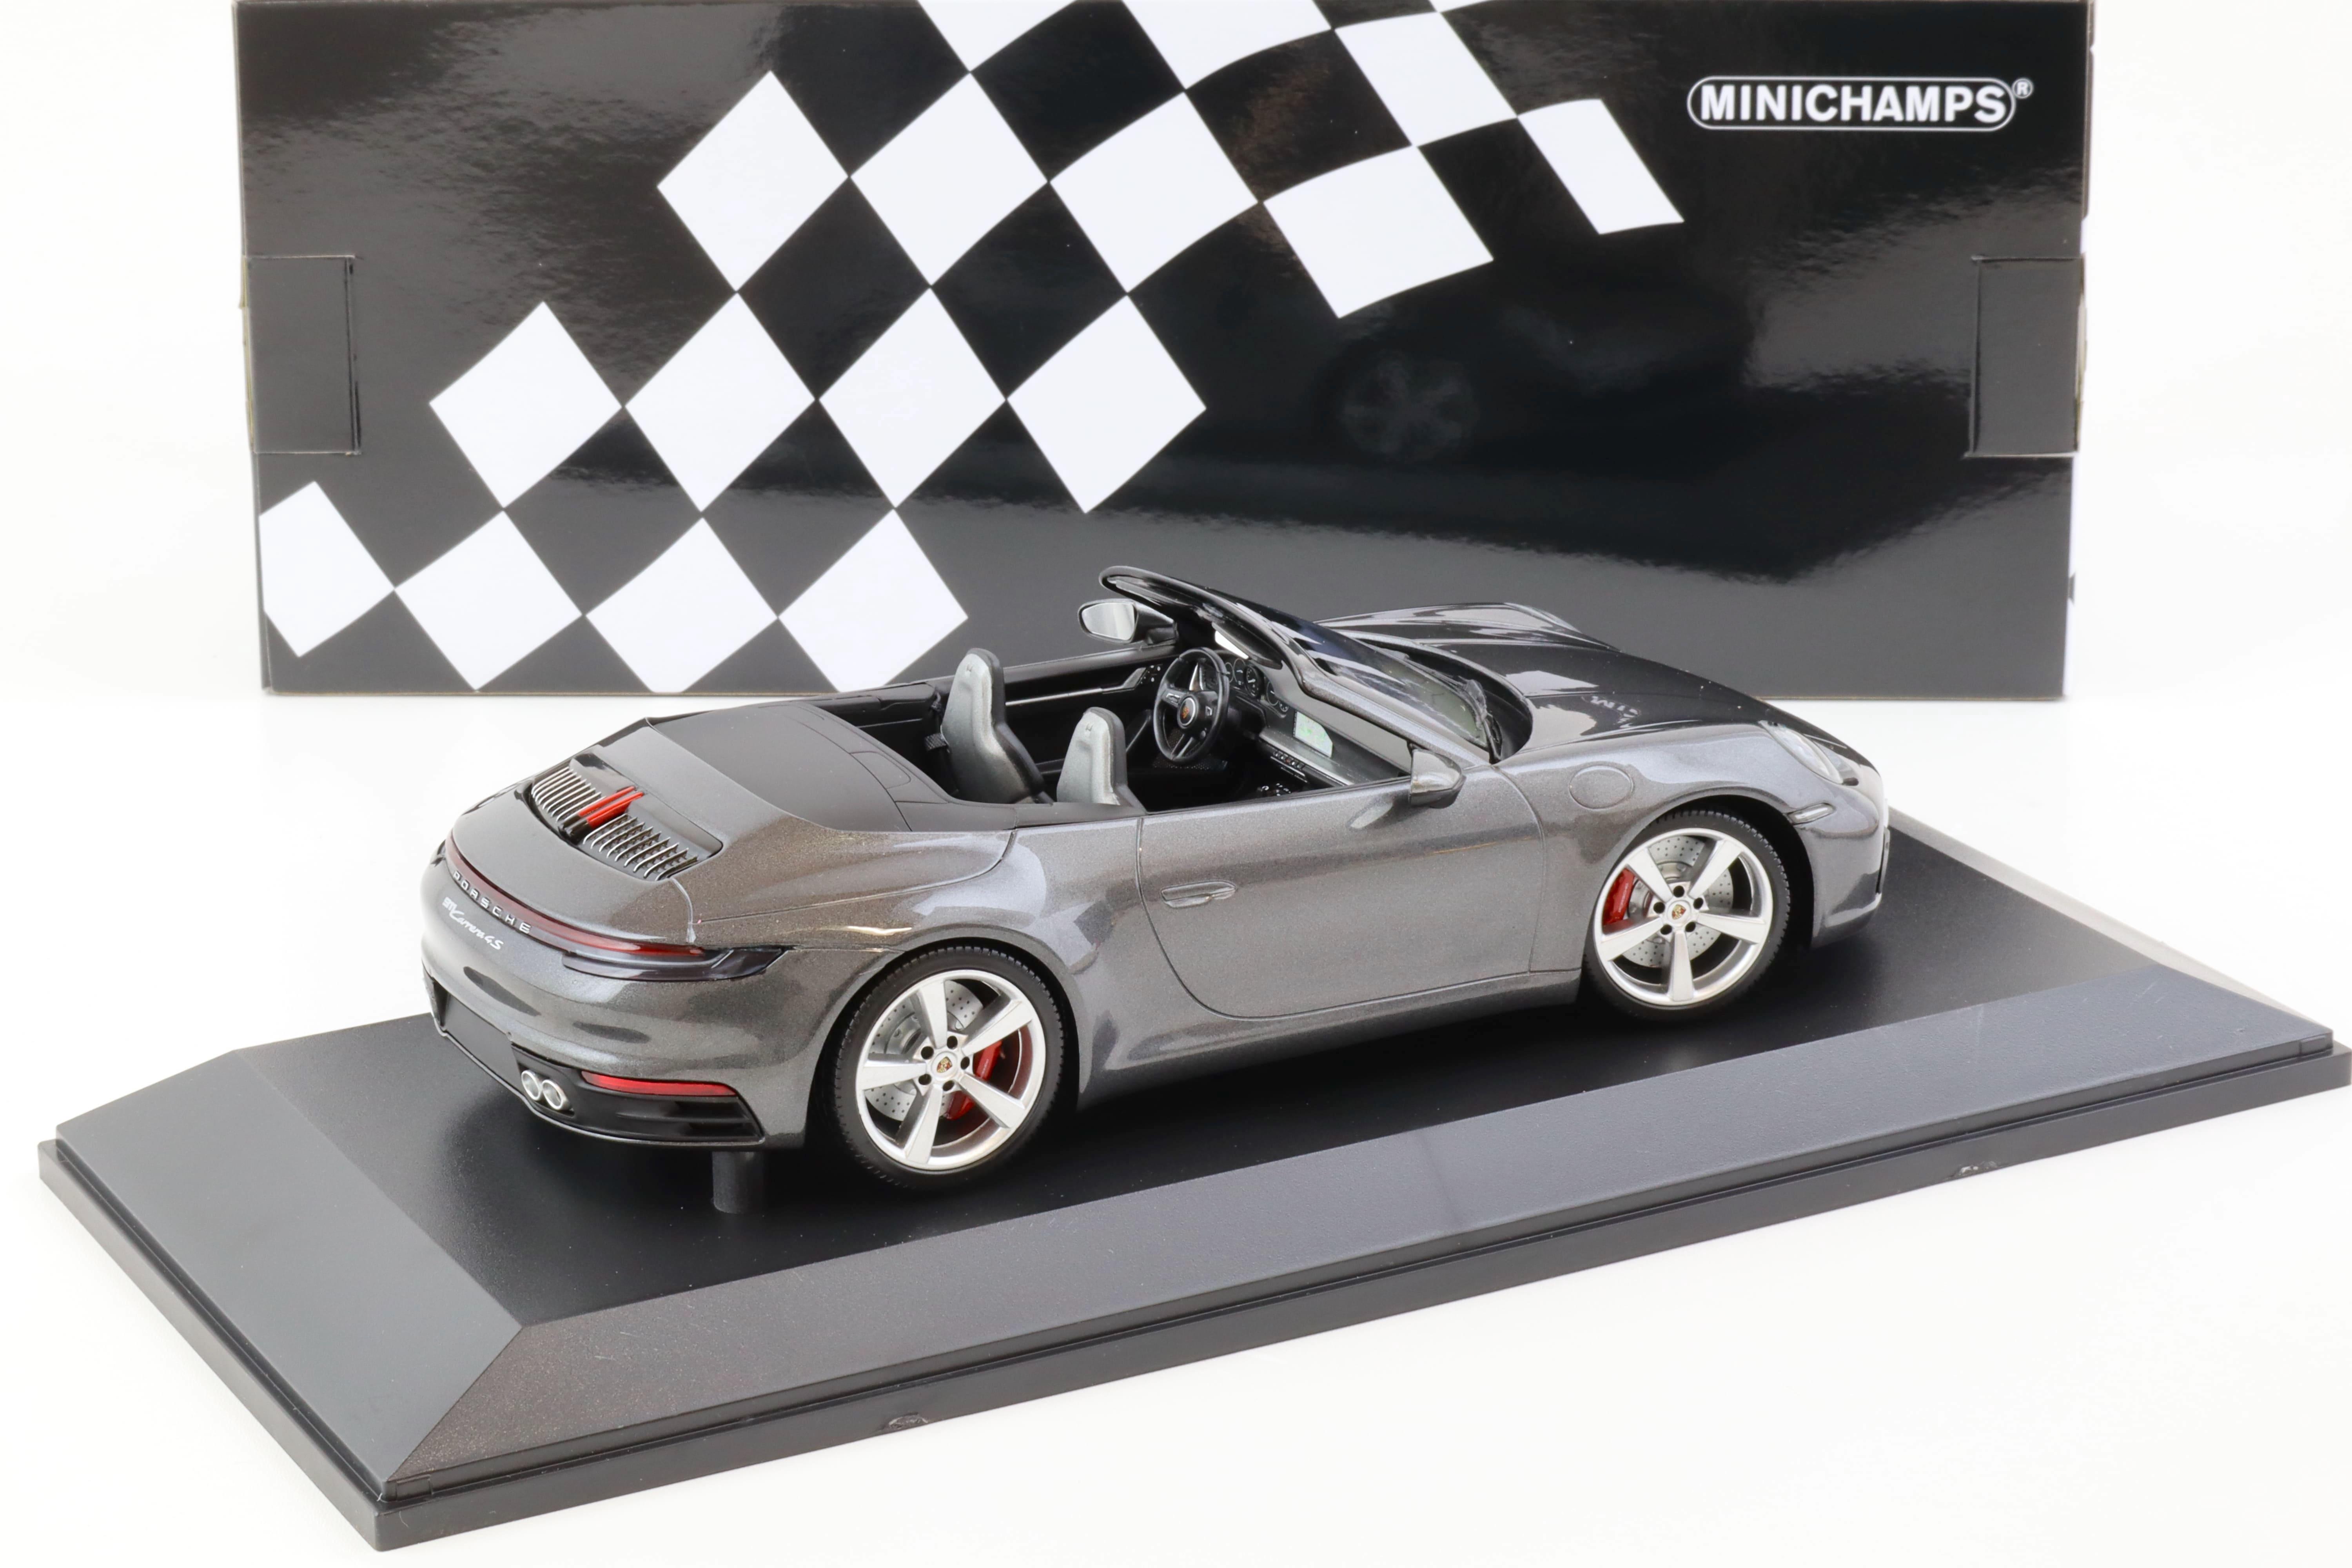 1:18 Minichamps Porsche 911 (992) Carrera 4S Cabriolet 2019 grey metallic